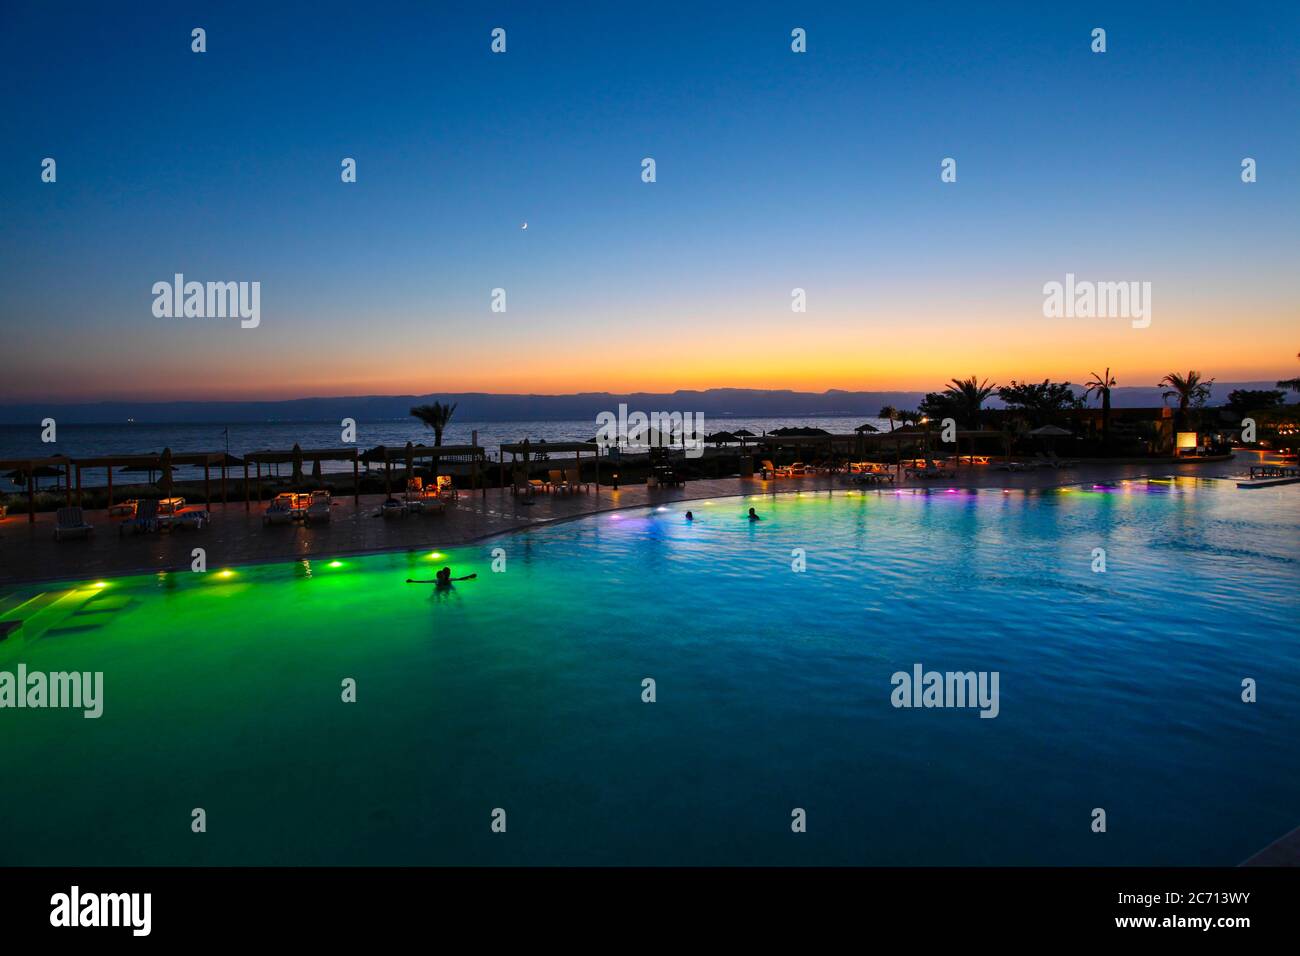 Jordan, Aqaba, Tala Bay Luxury Beach Resort. Al tramonto Foto Stock